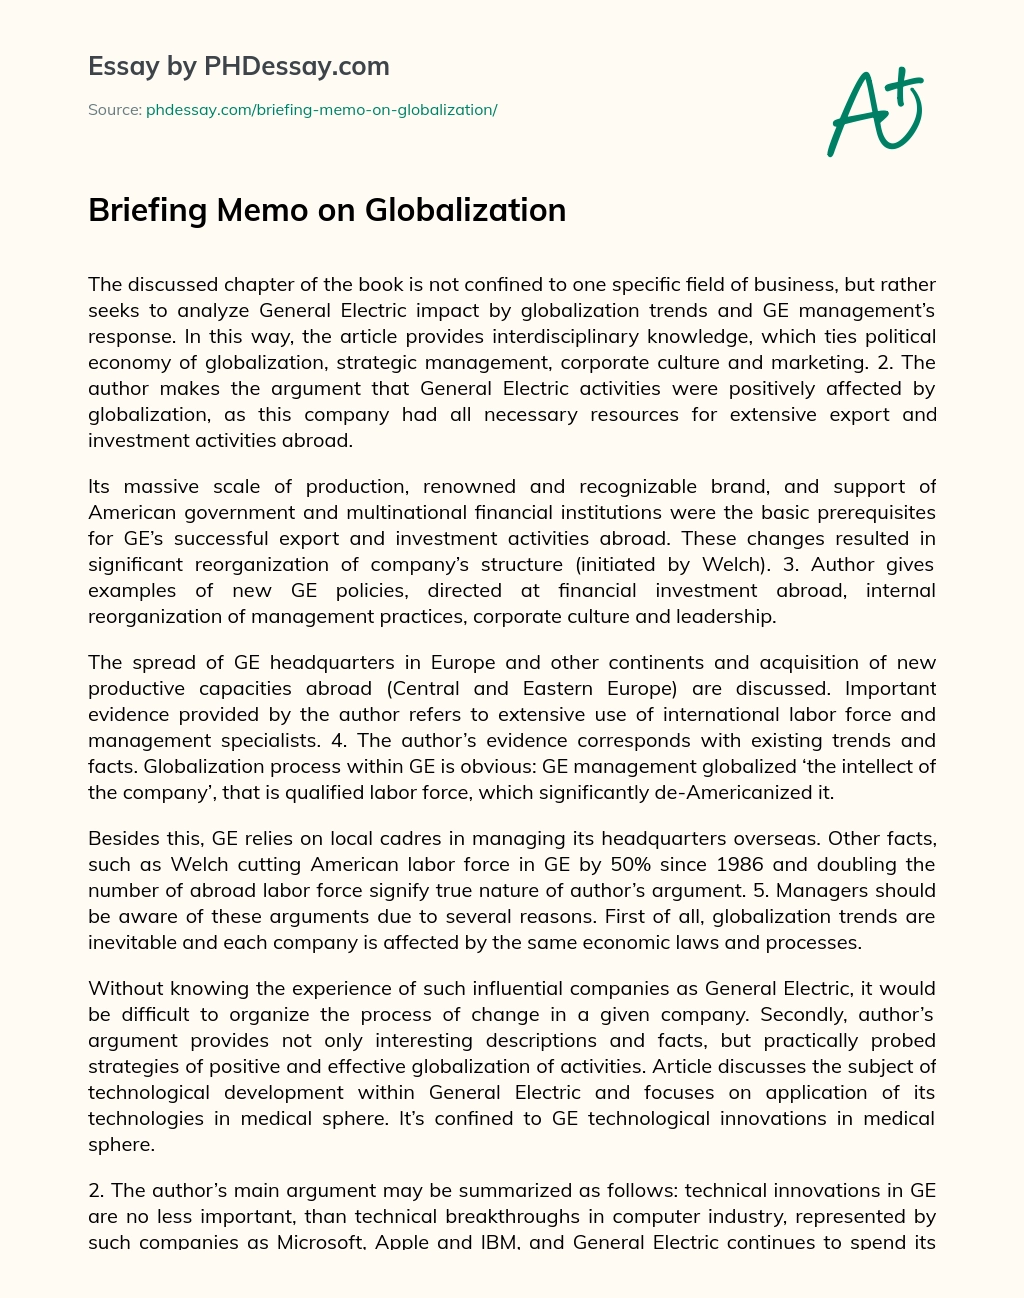 Briefing Memo on Globalization essay